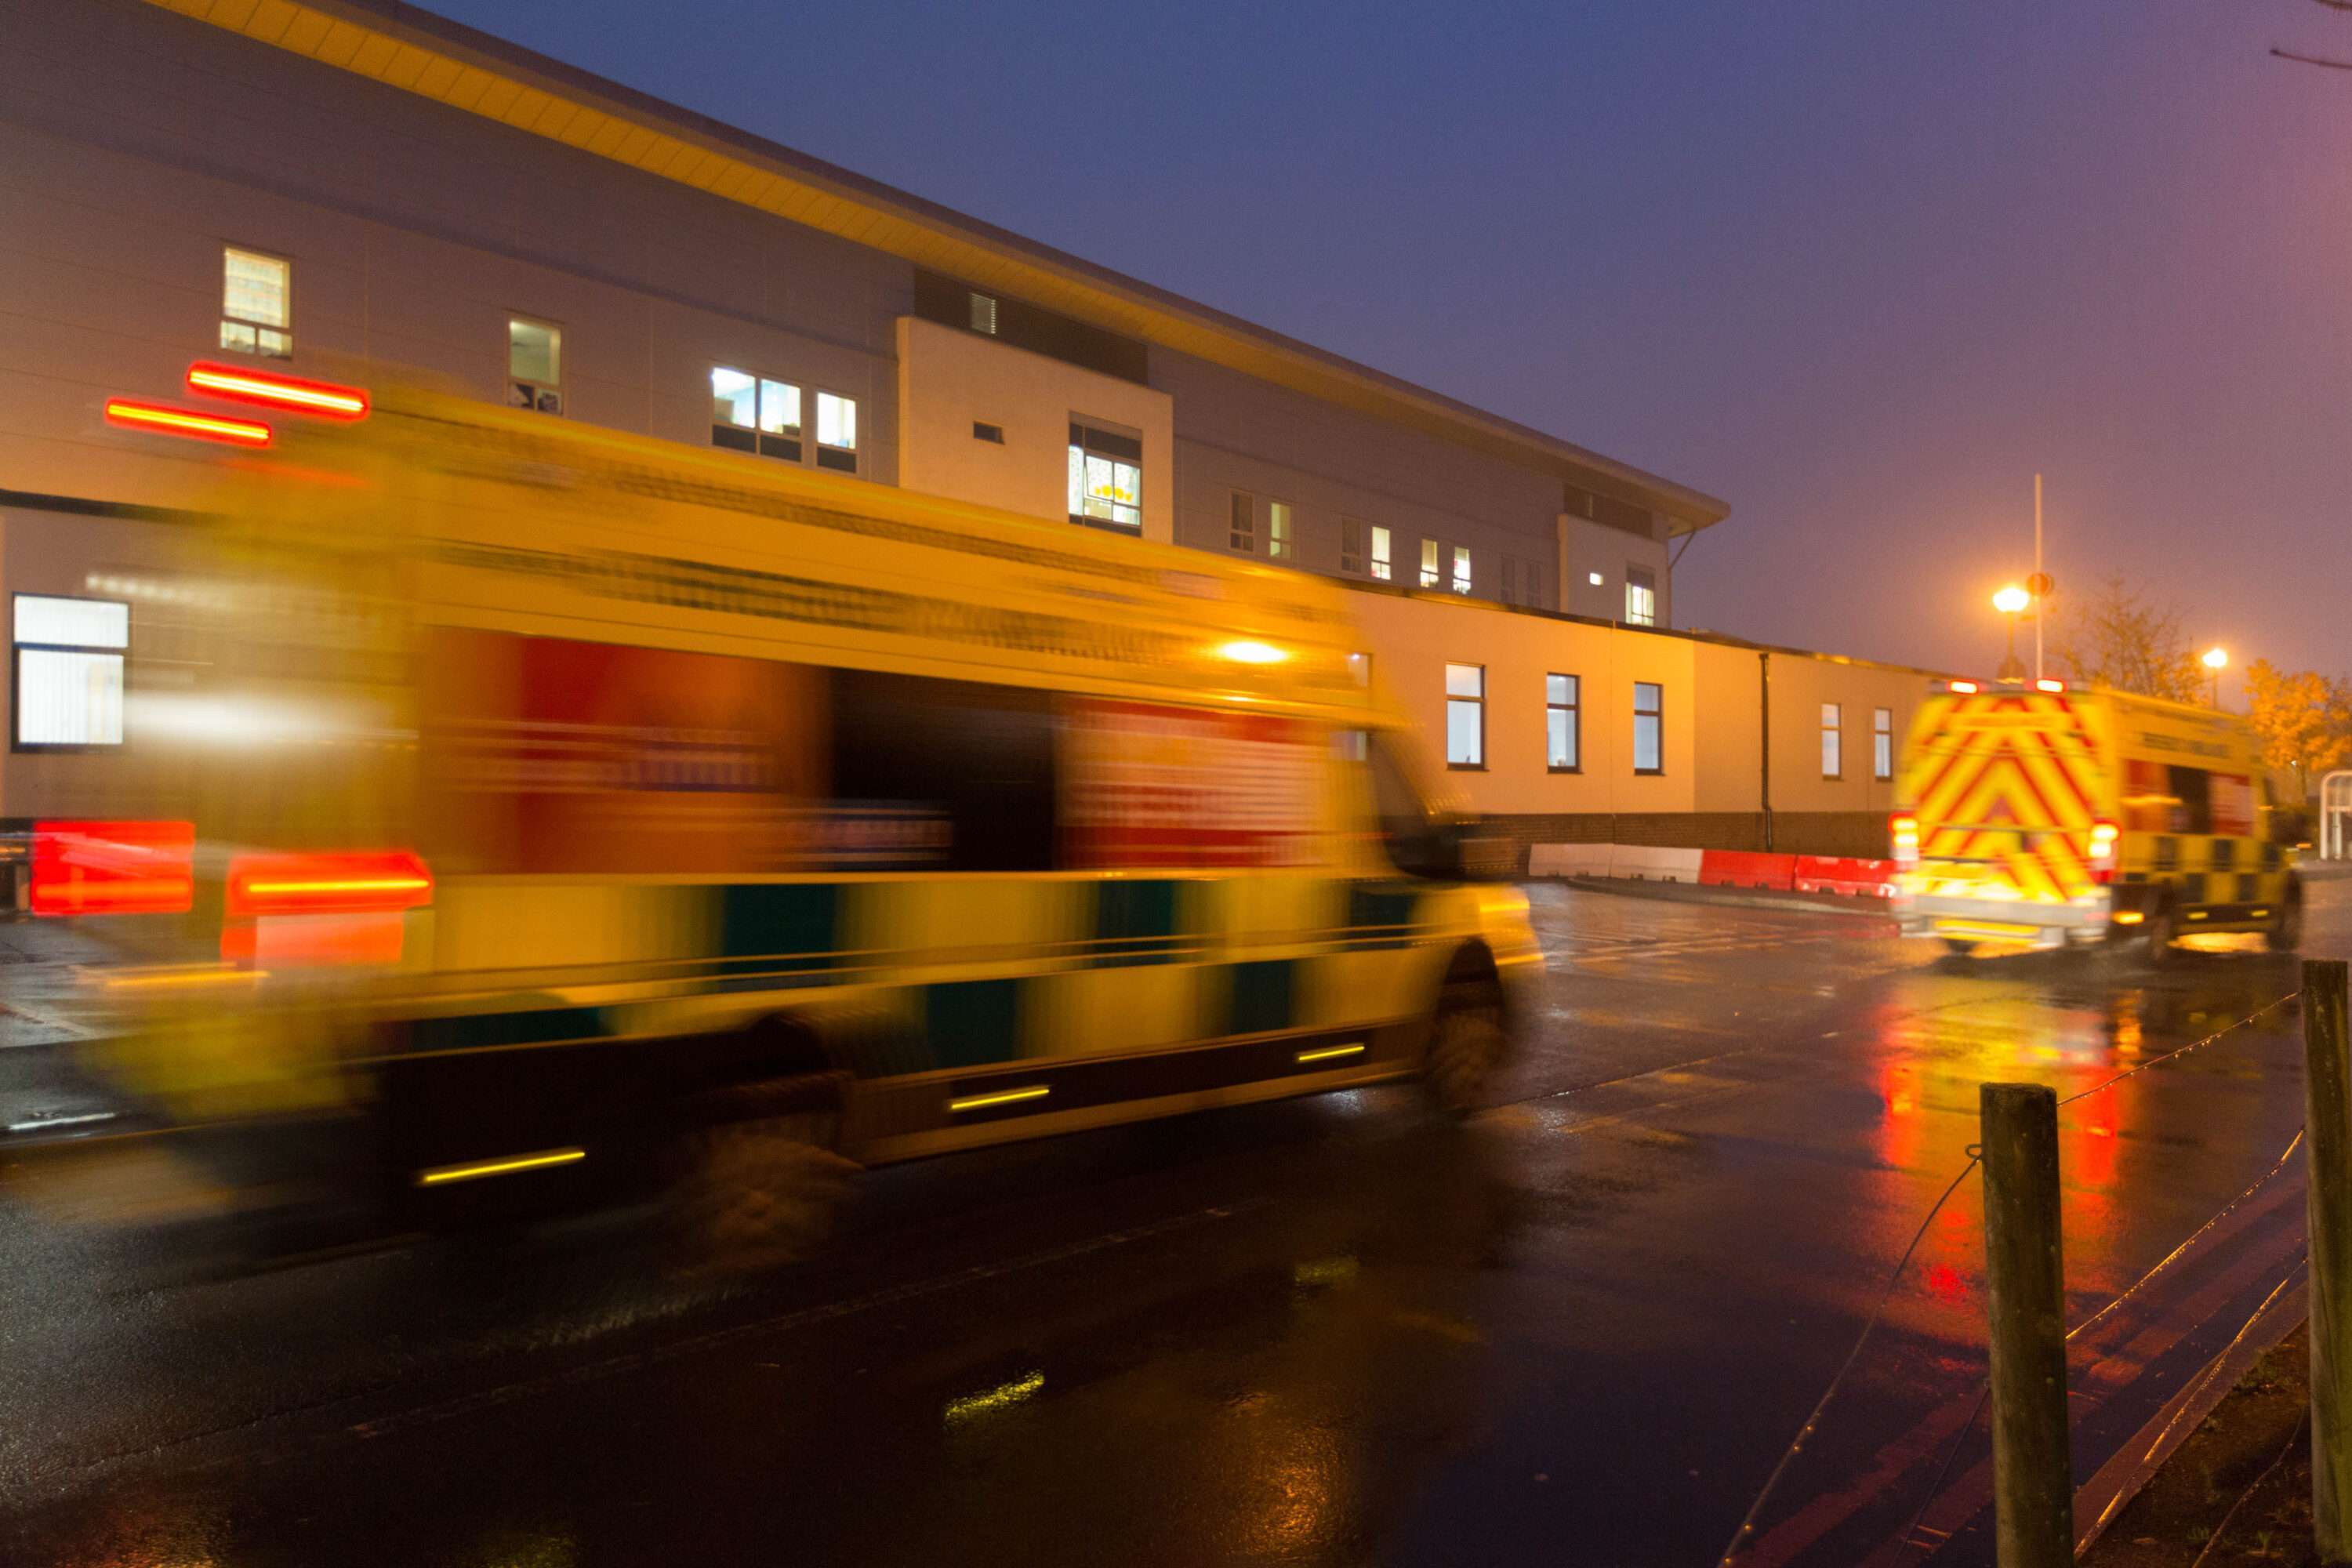 Two ambulances driving past a hospital ward at night time.